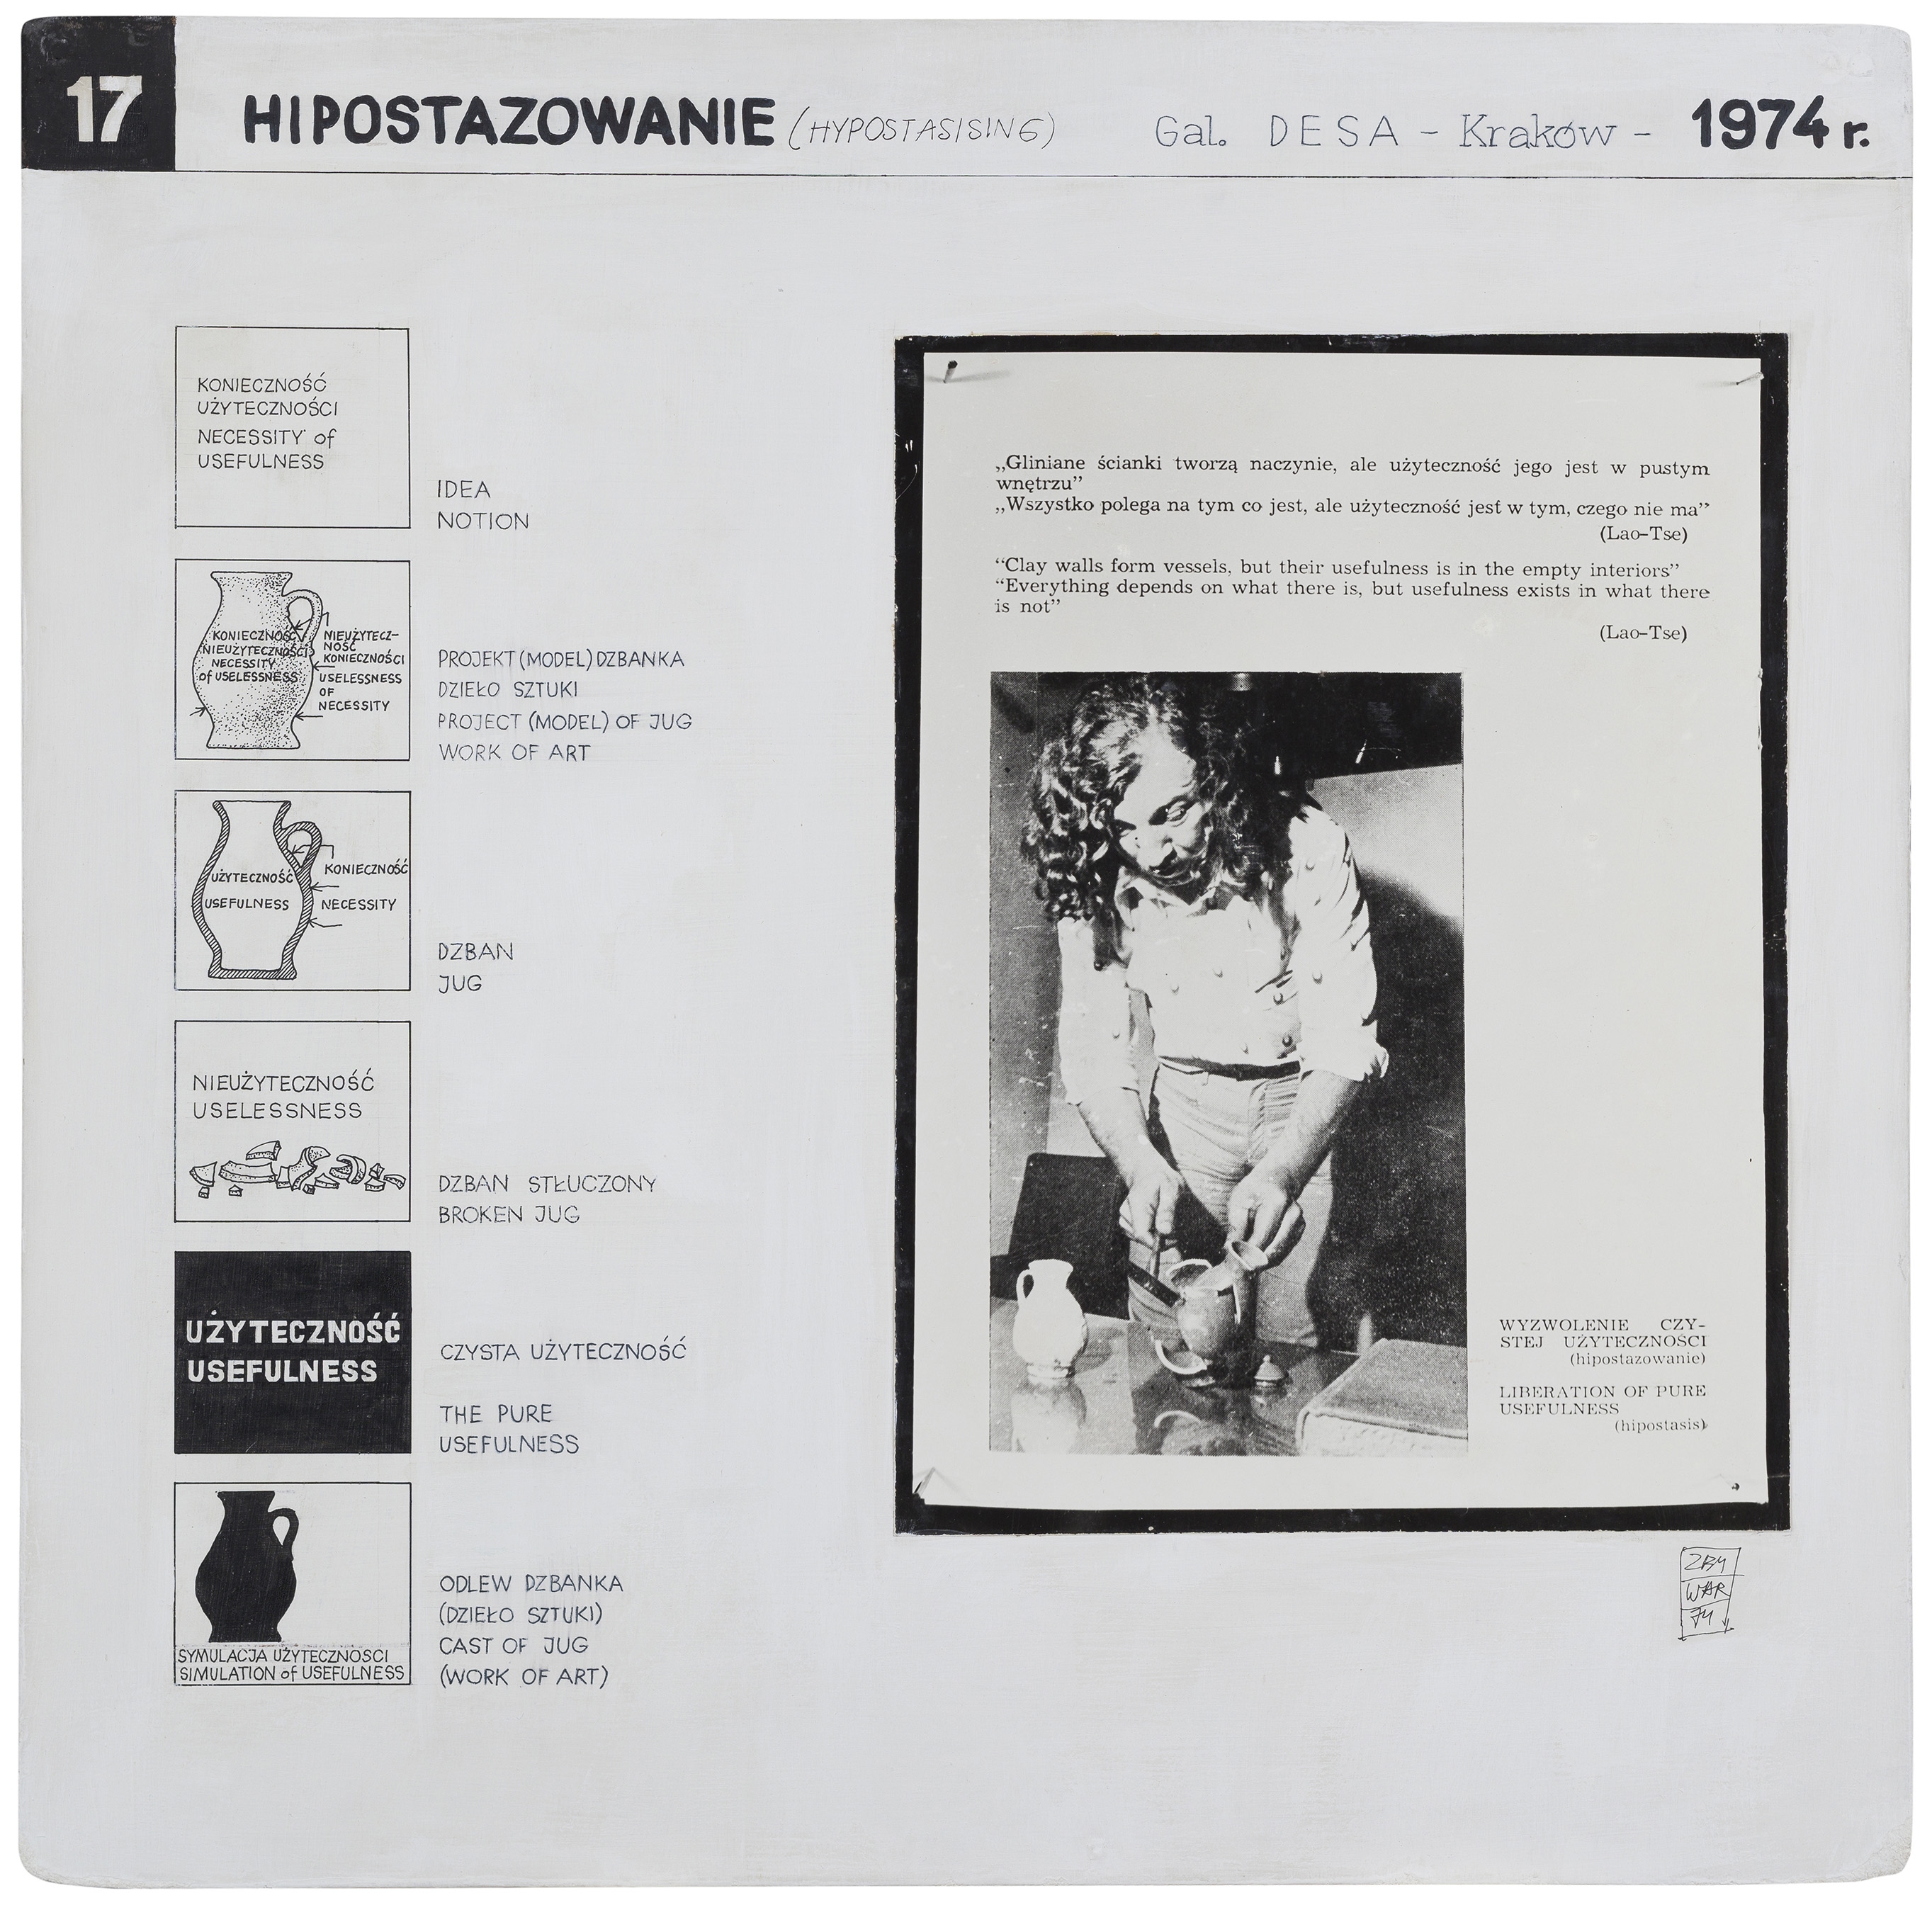 17. HIPOSTAZOWANIE (Hypostasising), Gal. DESA – Kraków, 1974